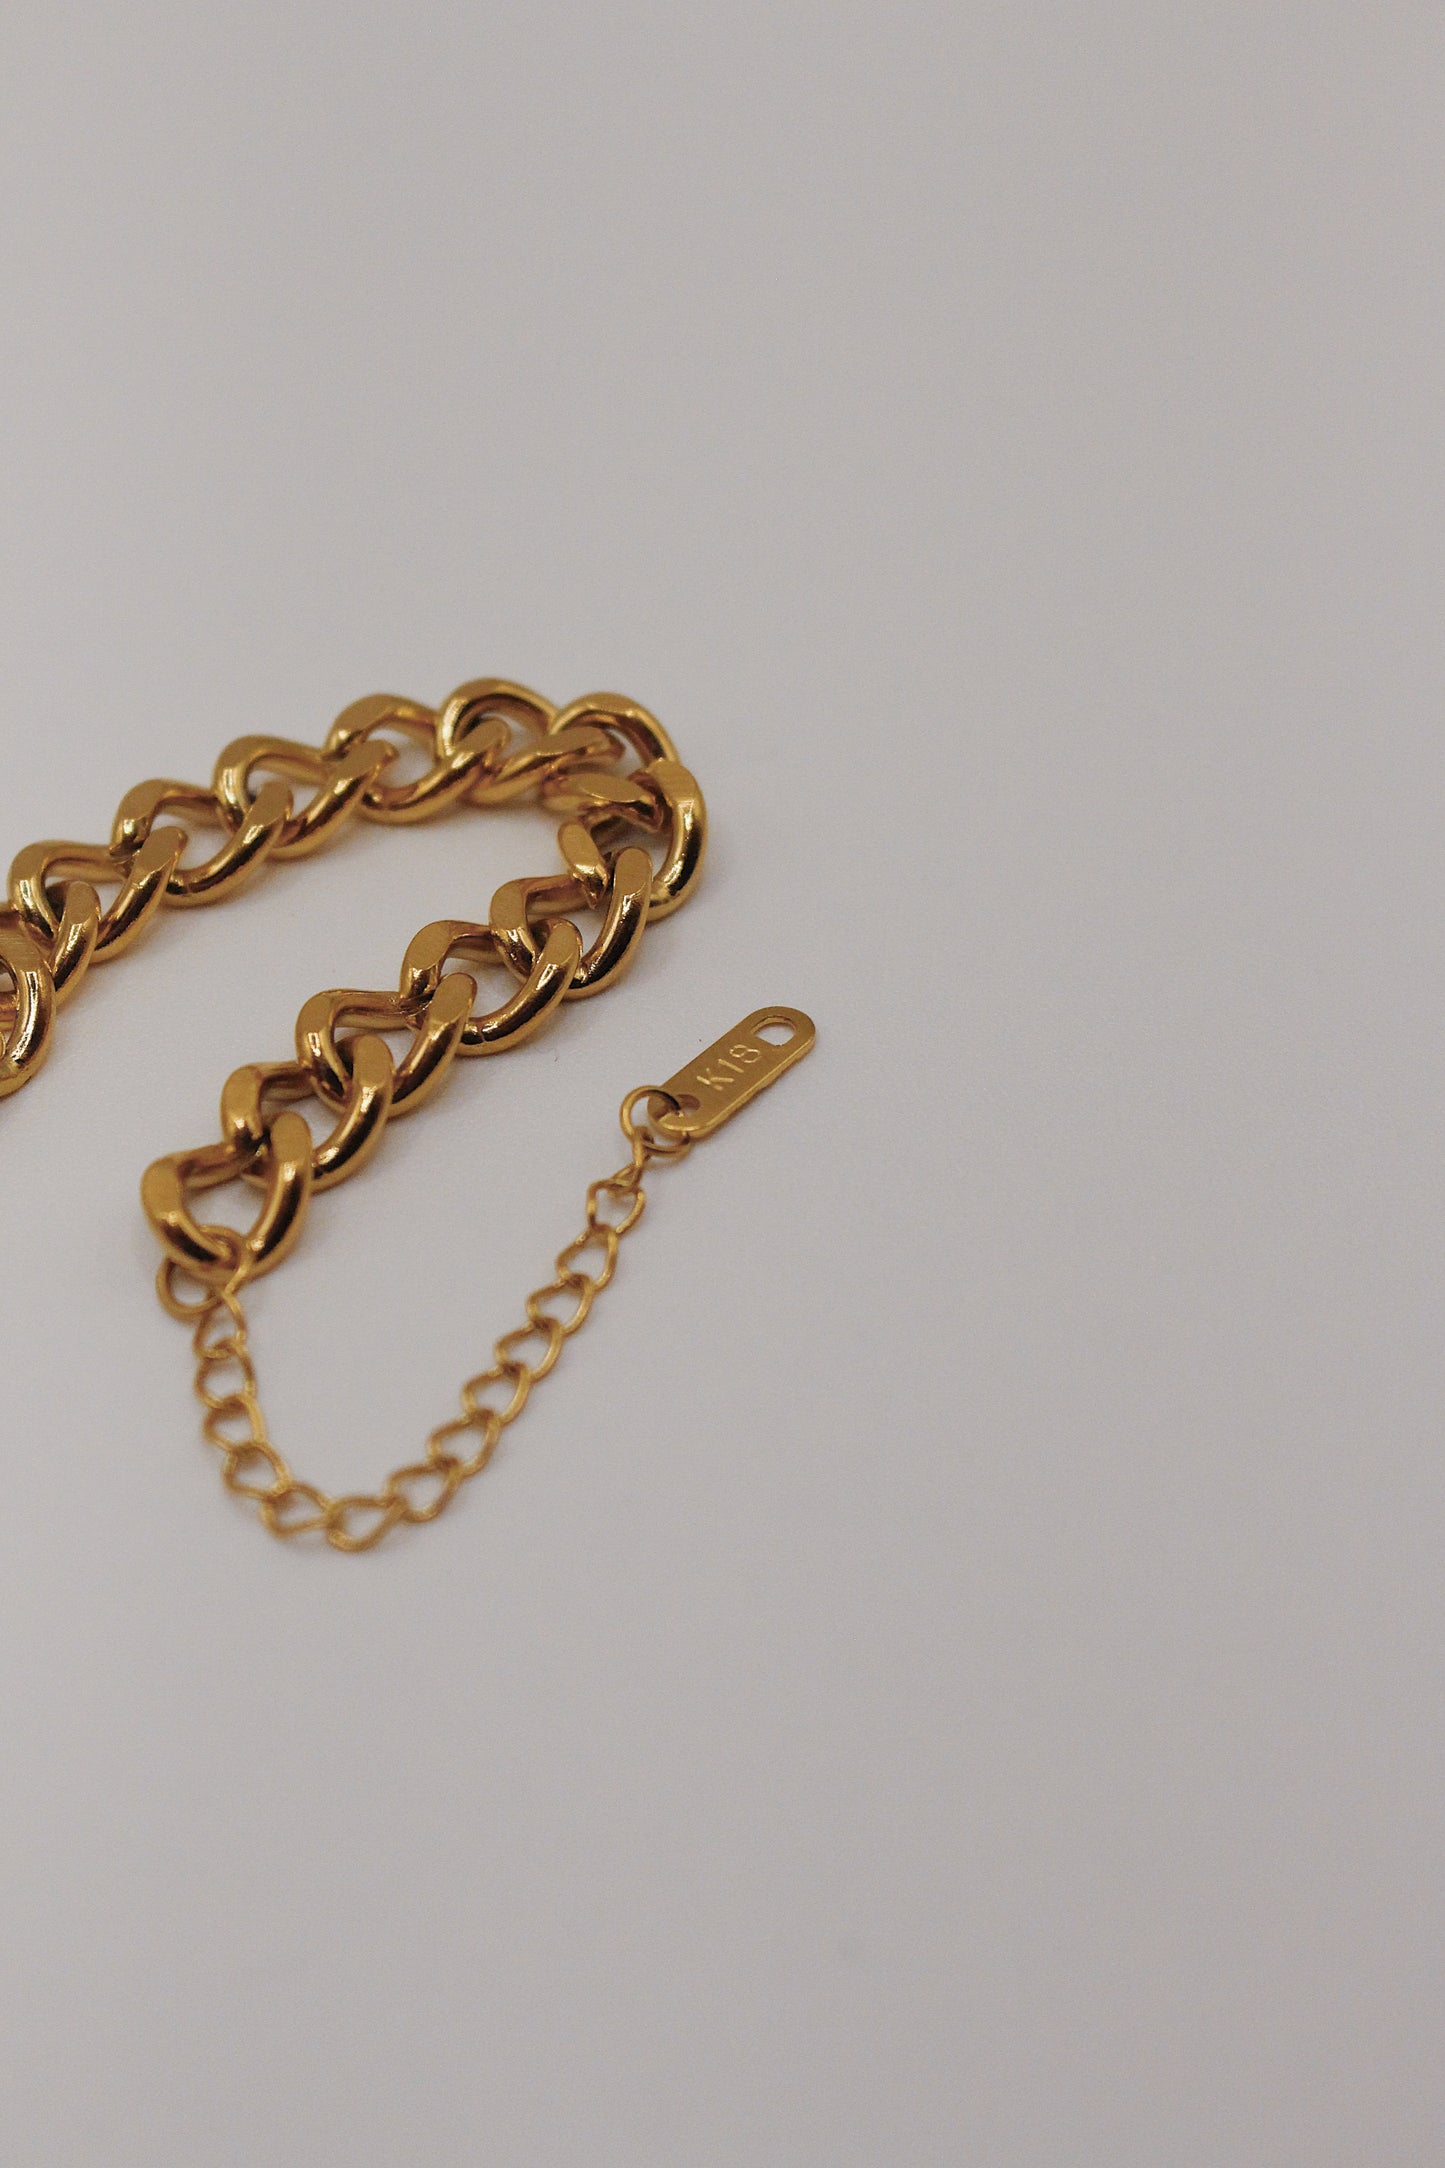 Erkelens Necklace - 5mm